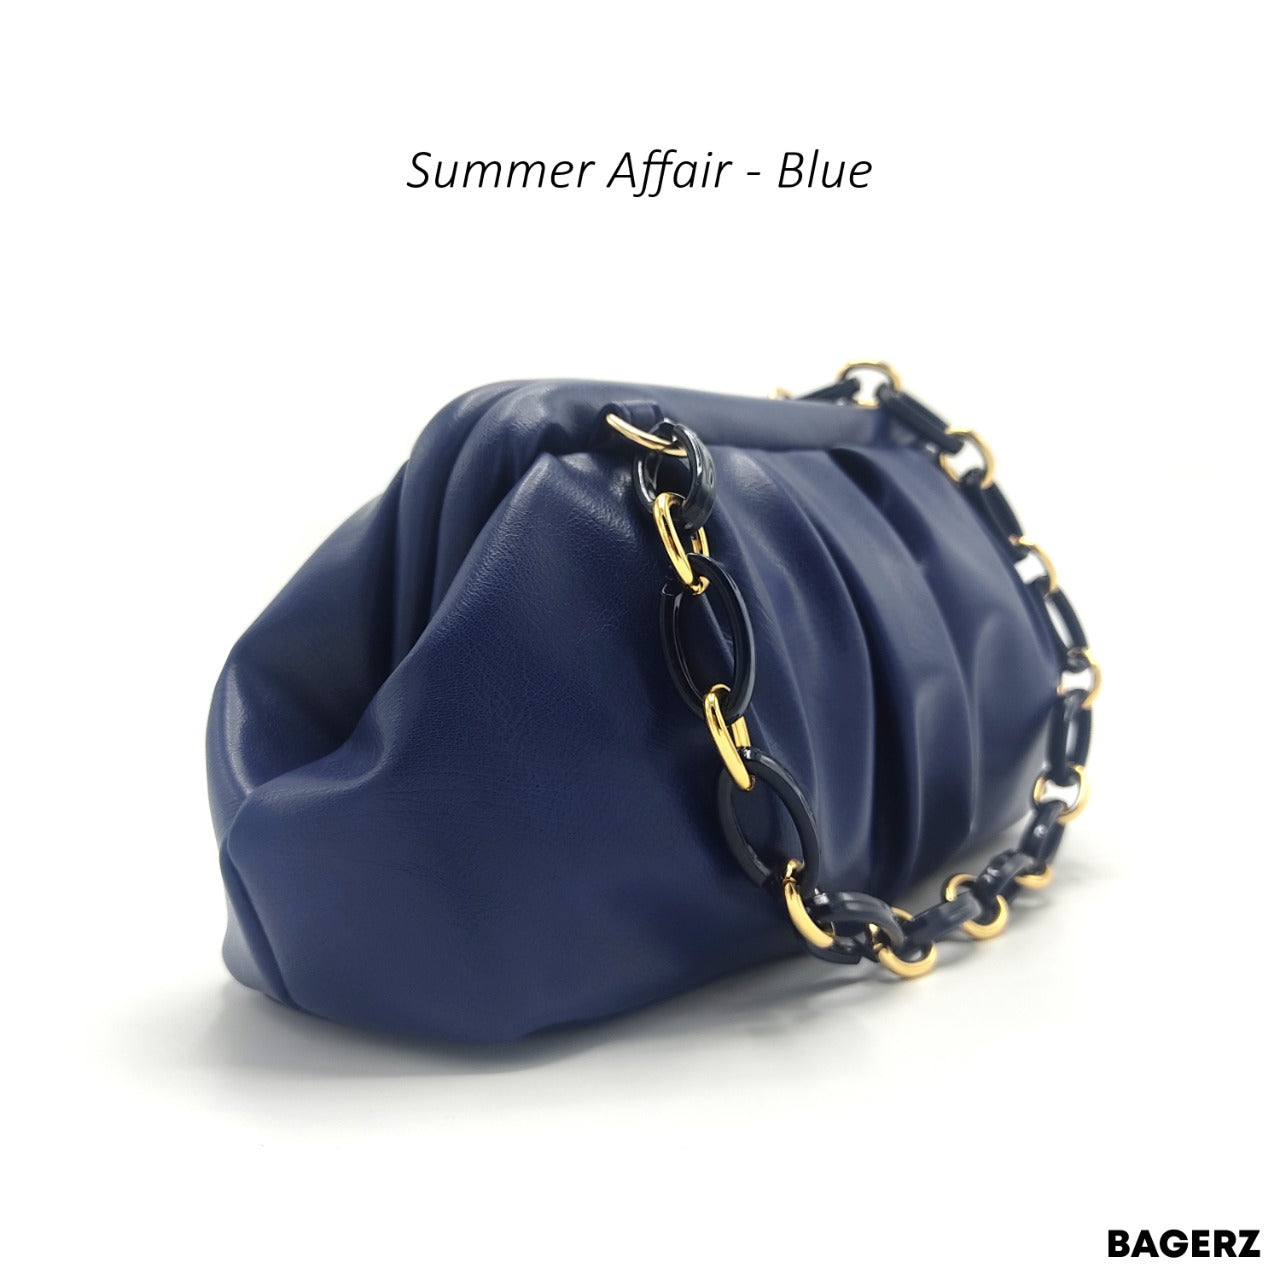 Summer Affair - Blue